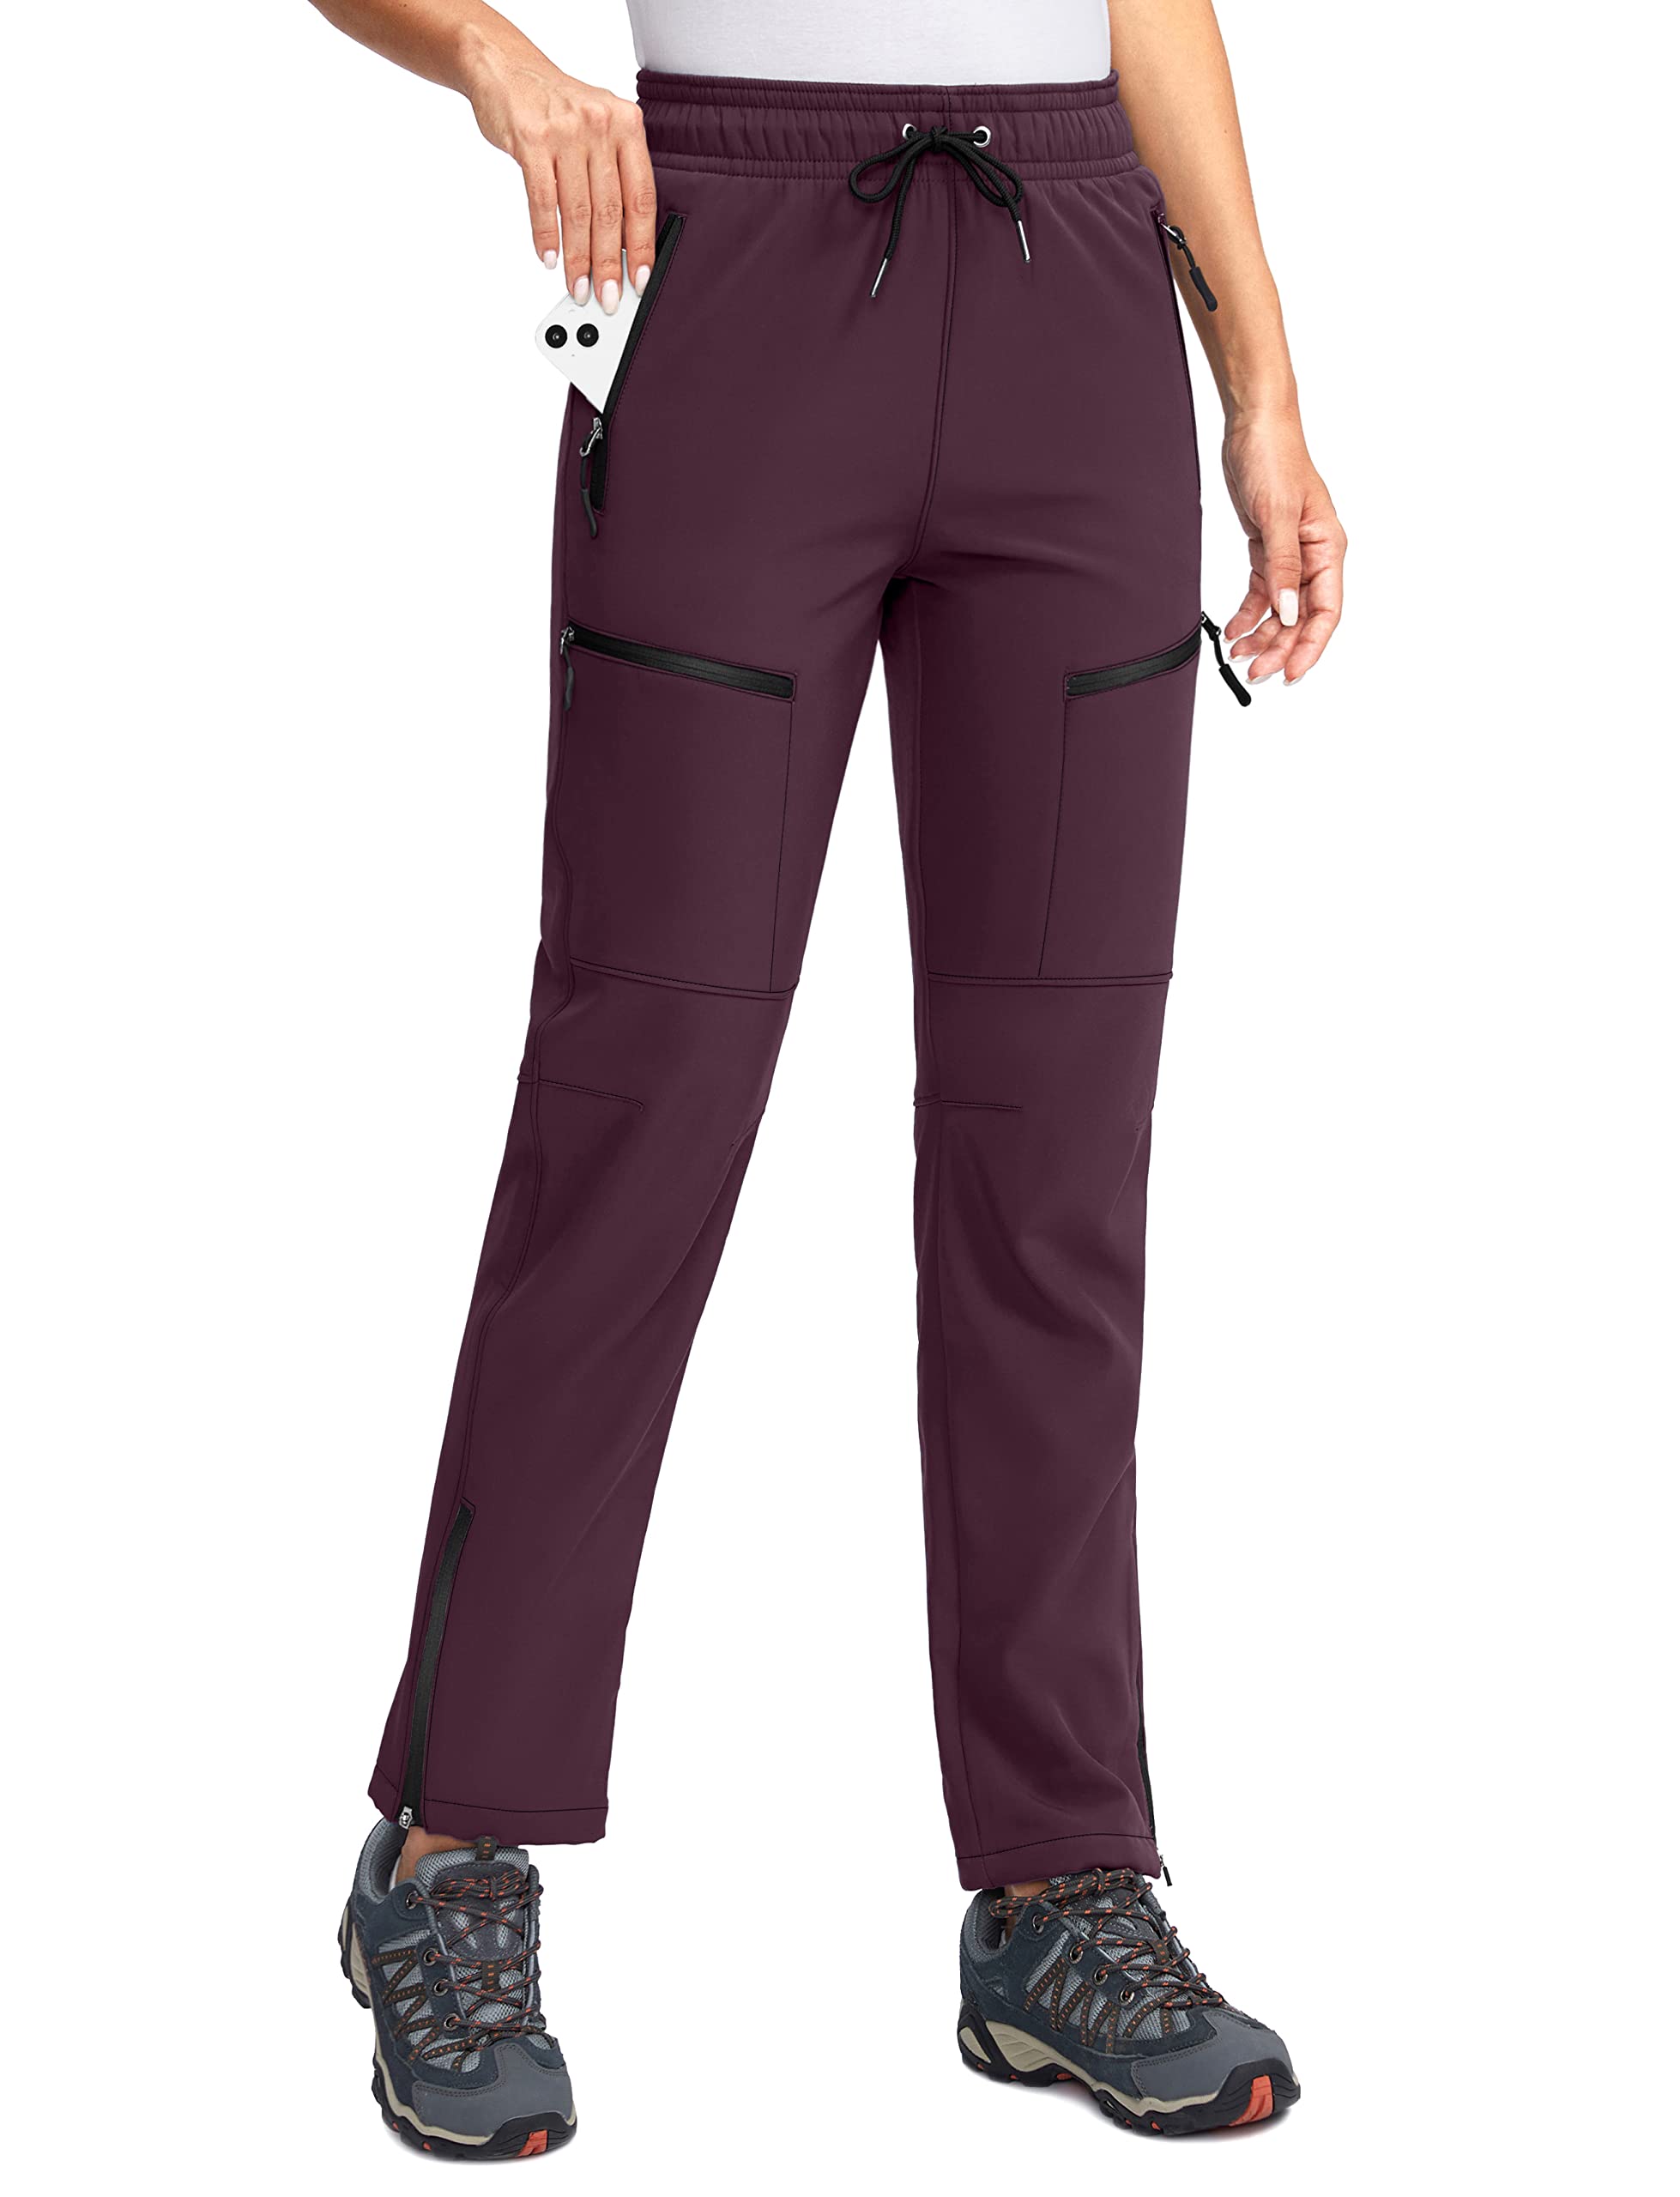 SANTINY Women's Fleece Lined Hiking Pants 4 Zipper Pockets Warm Winter  Softshell Snow Ski Pants Waterproof Insulated (Wine_L)